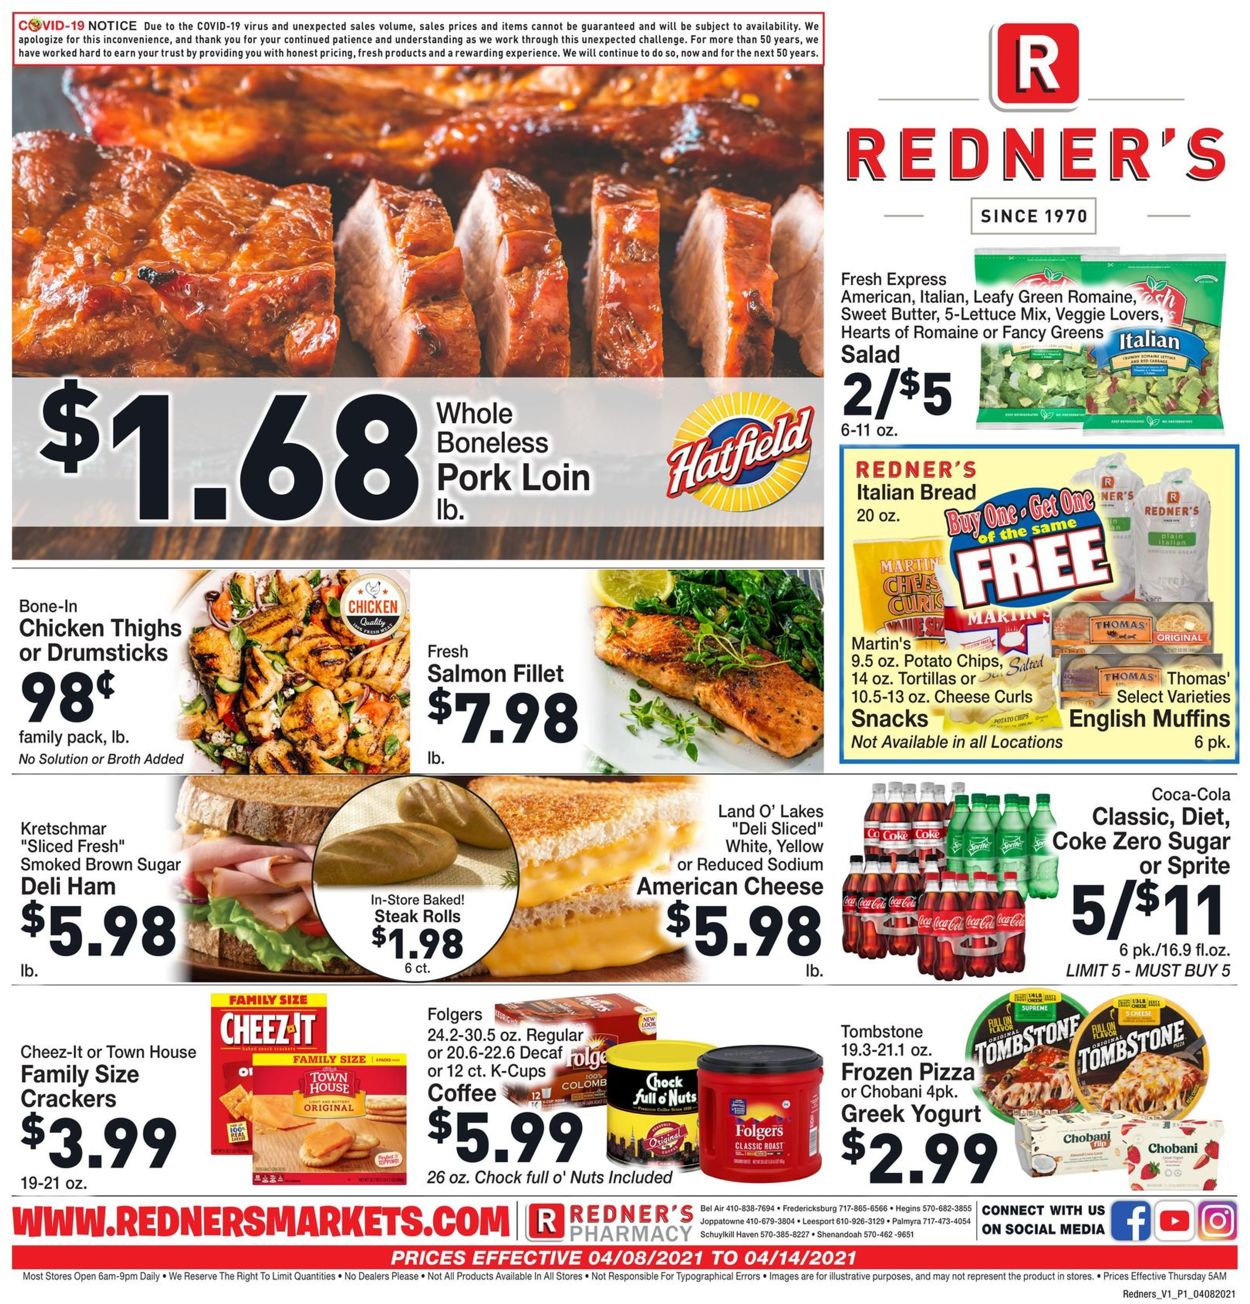 Redner’s Warehouse Market Ad from 04/08/2021